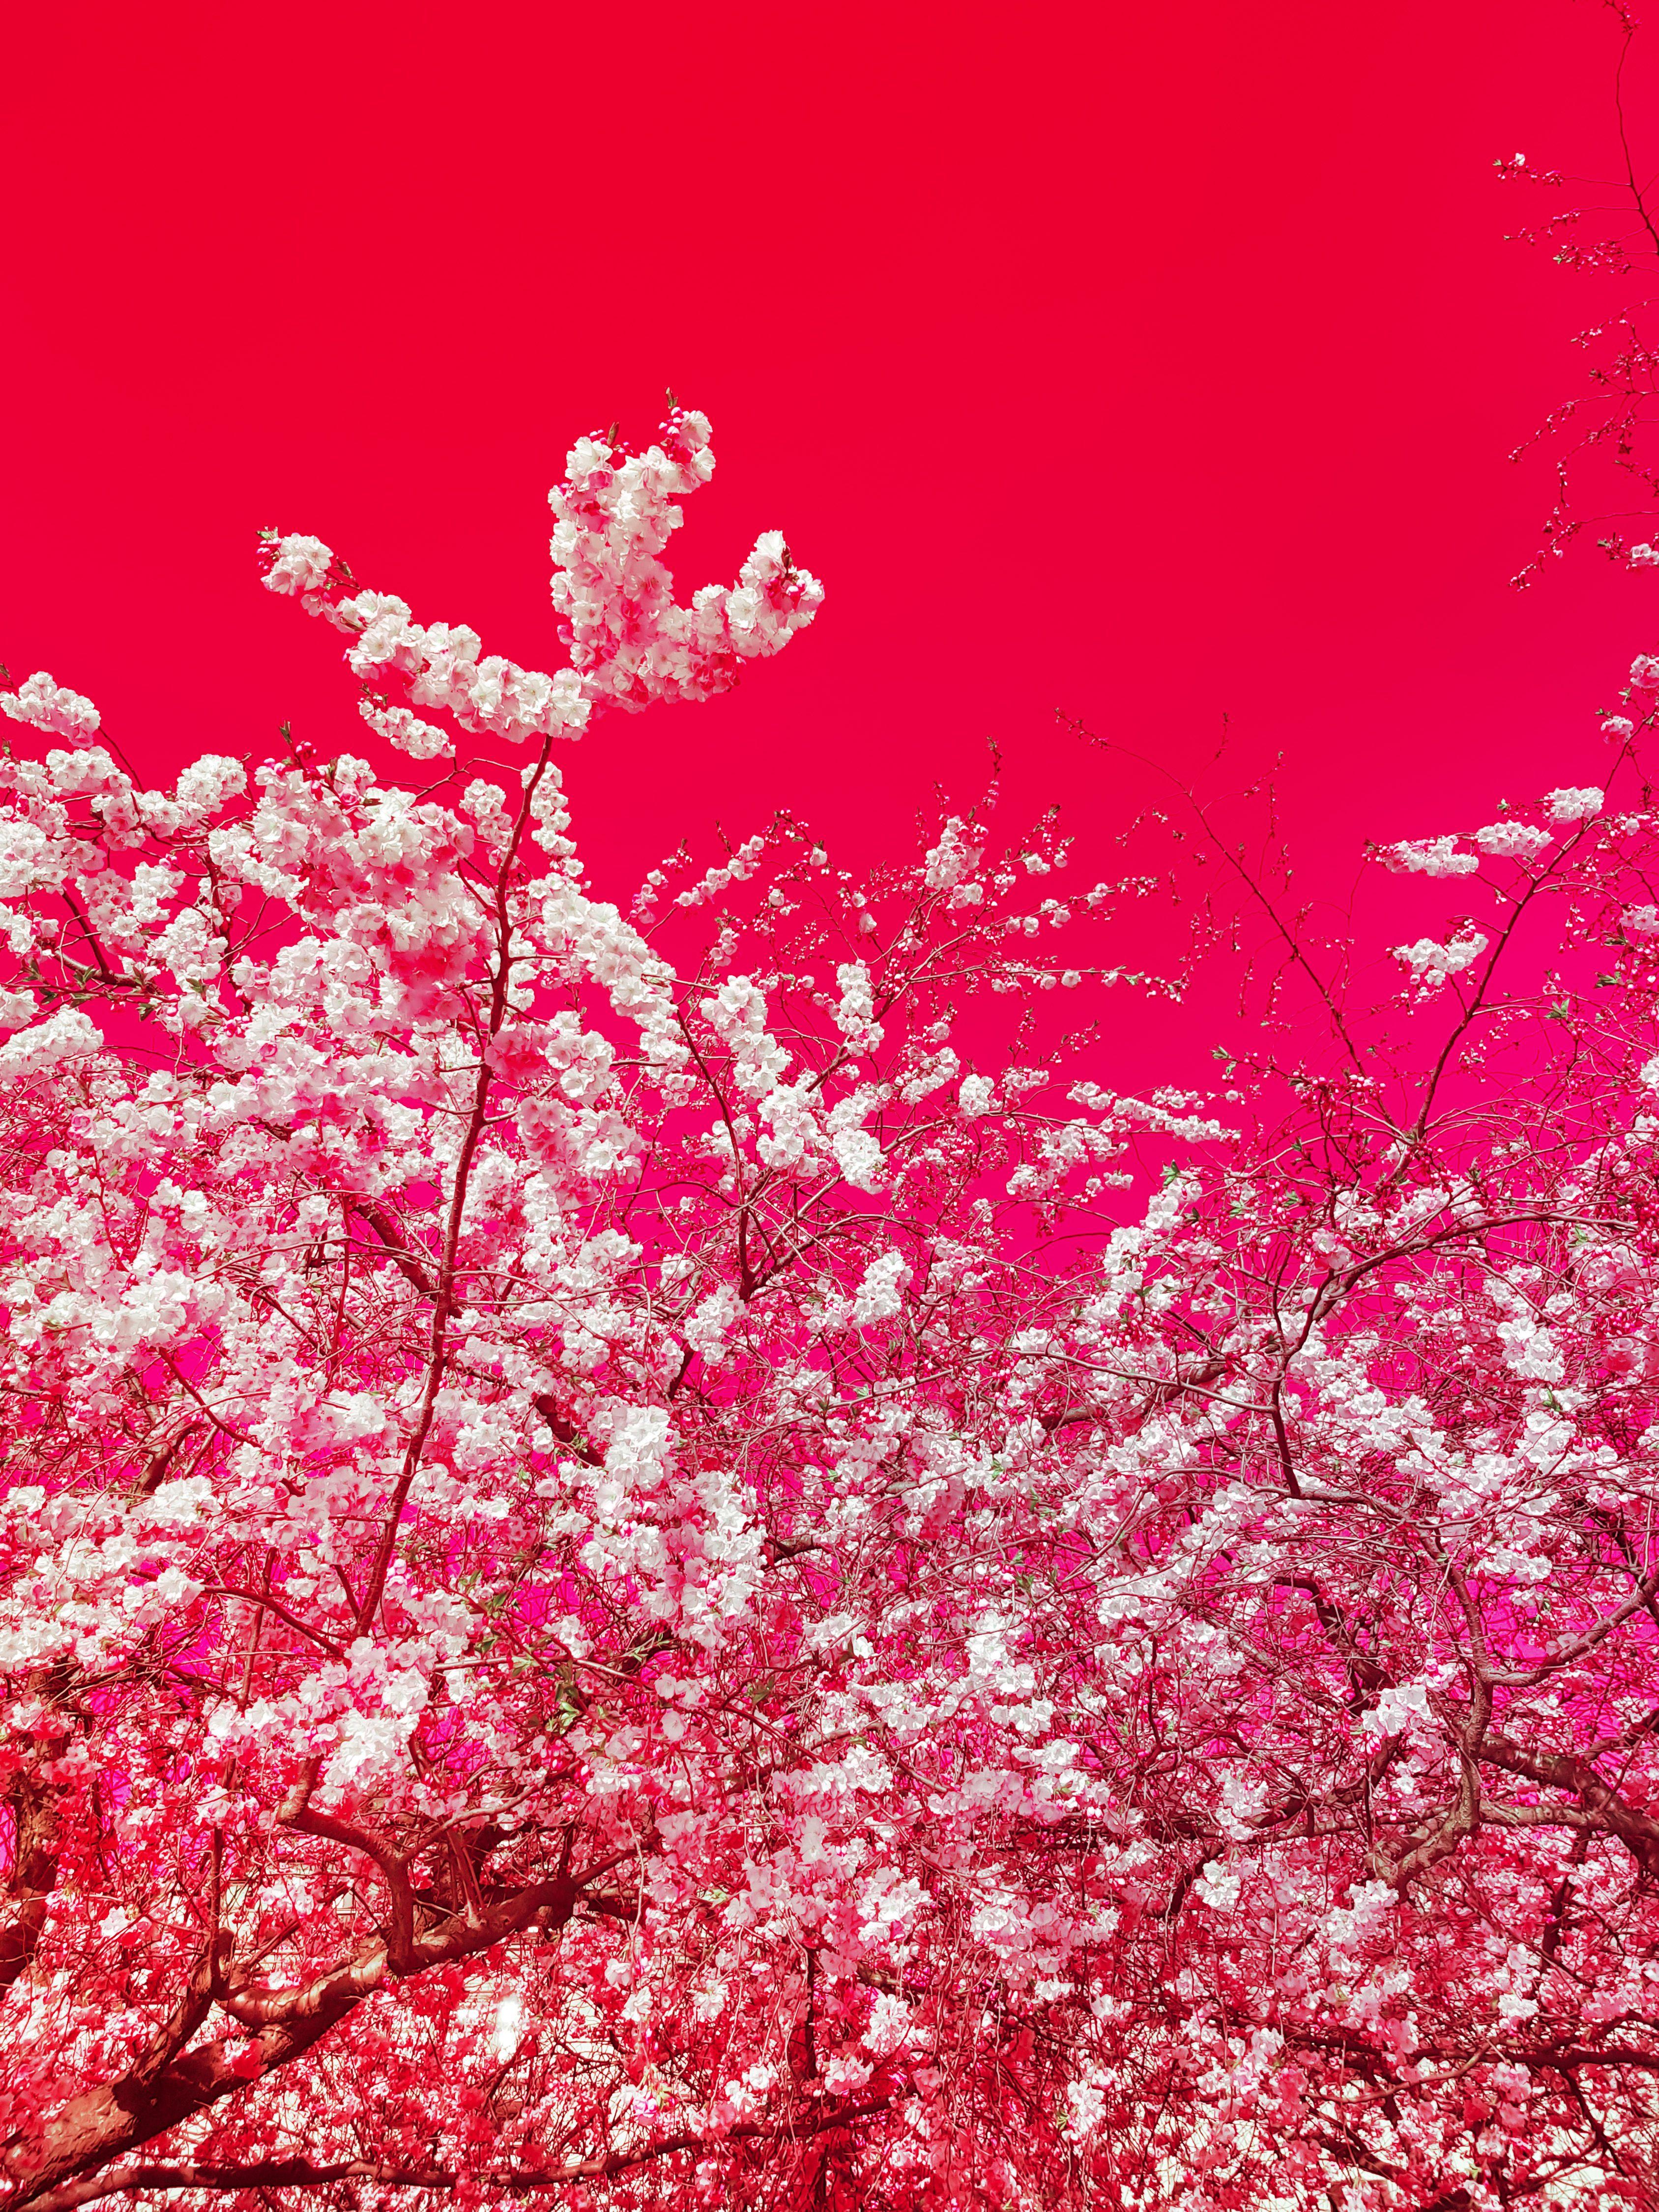 Viet Ha Tran Color Photograph - The colors of spring X, Photograph, C-Type